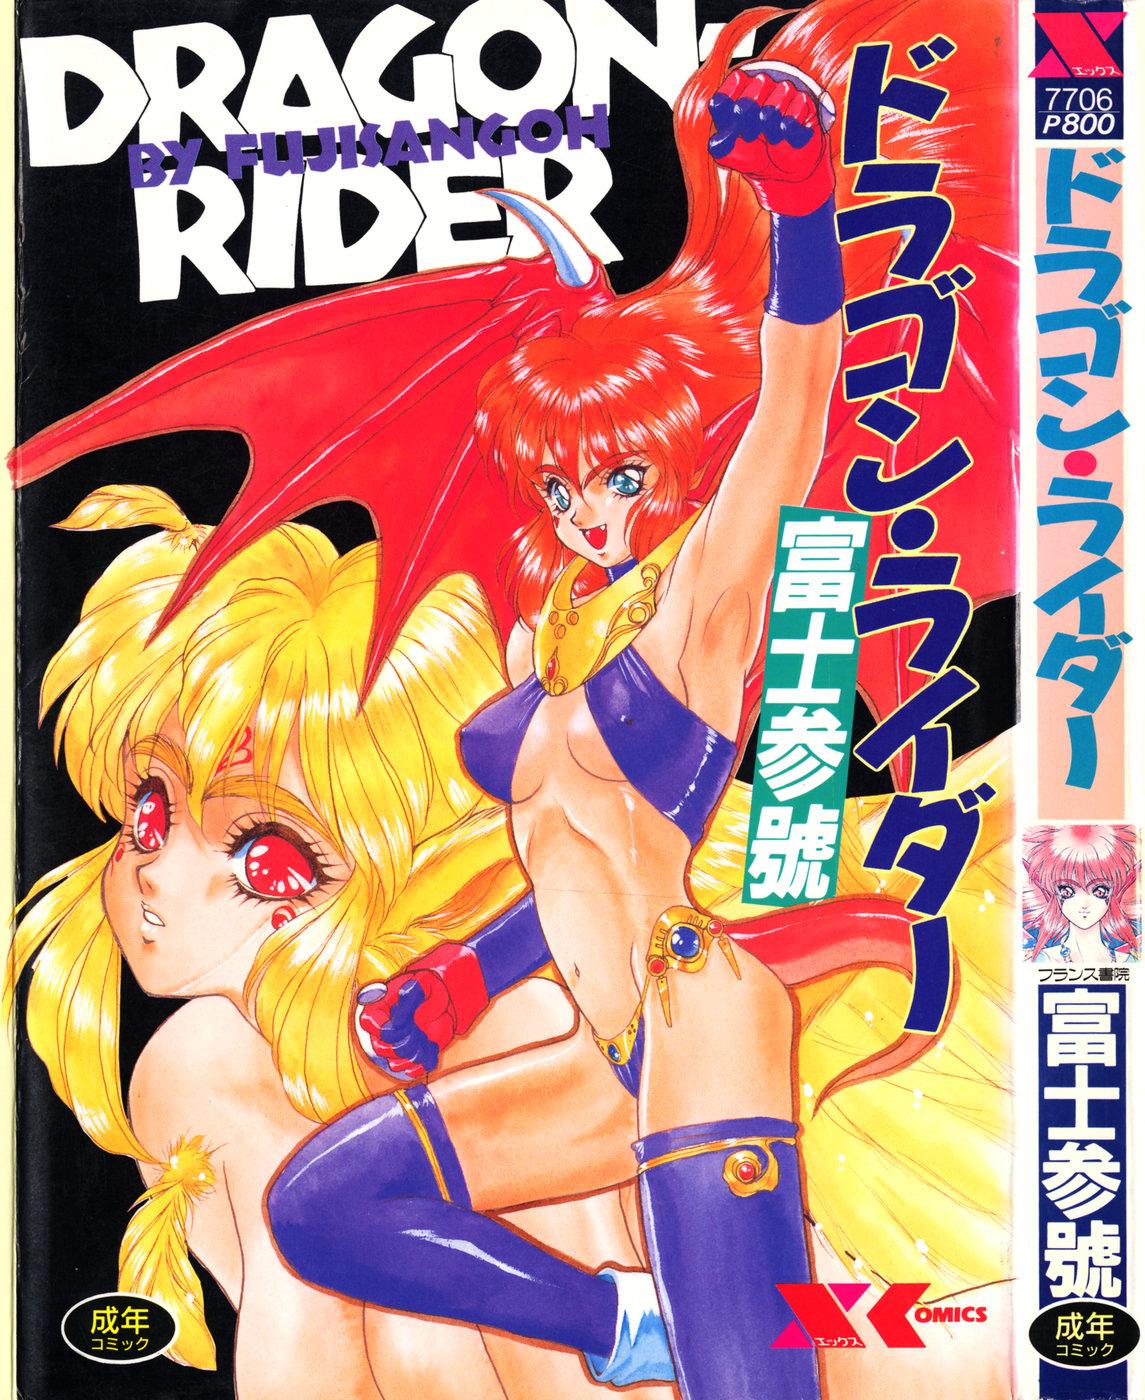 Dragon rider 0